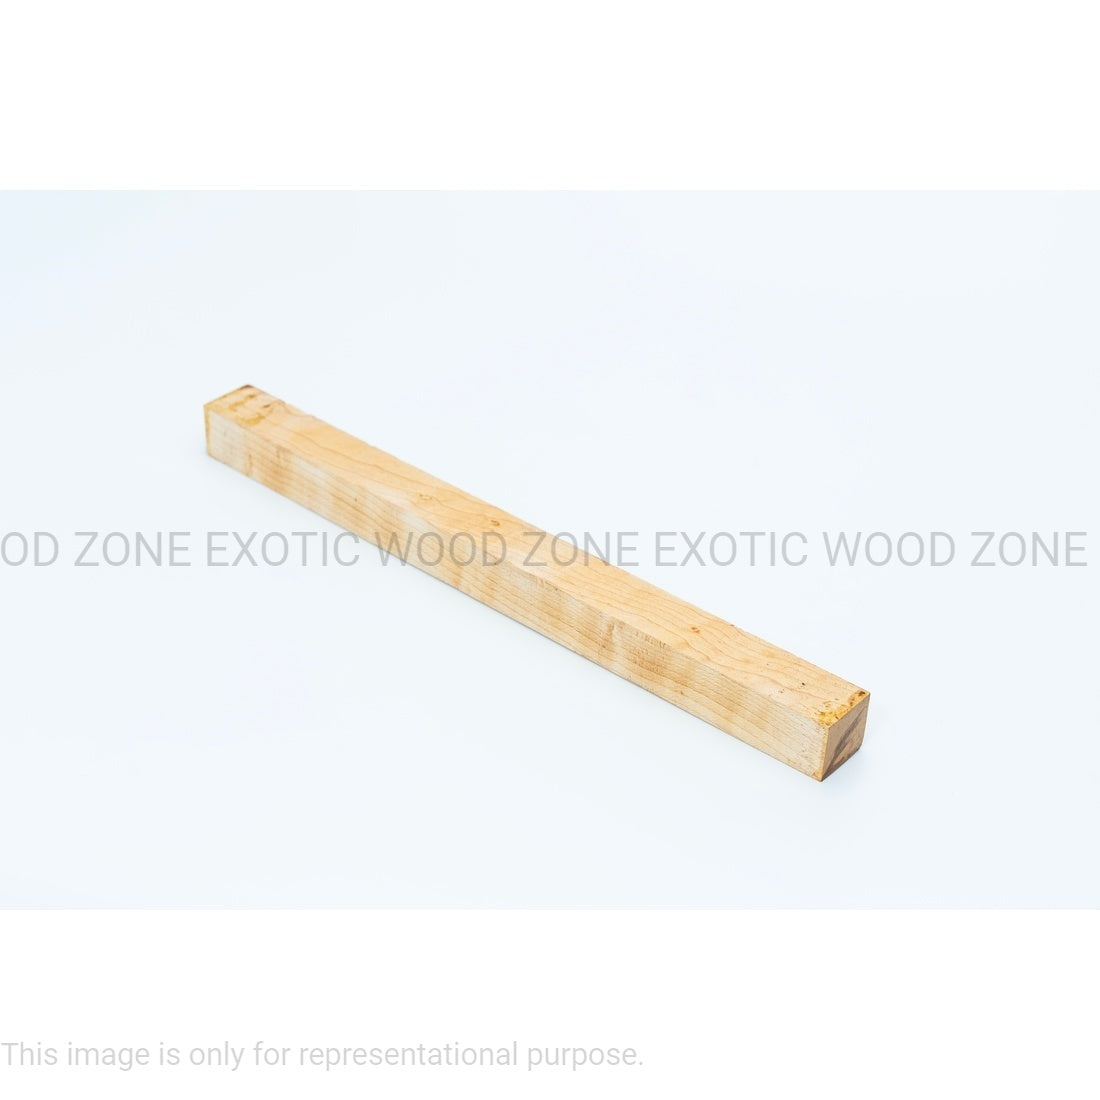 Birds Eye Maple Hobby Wood/ Turning Wood Blanks 1 x 1 x 12 inches - Exotic Wood Zone - Buy online Across USA 